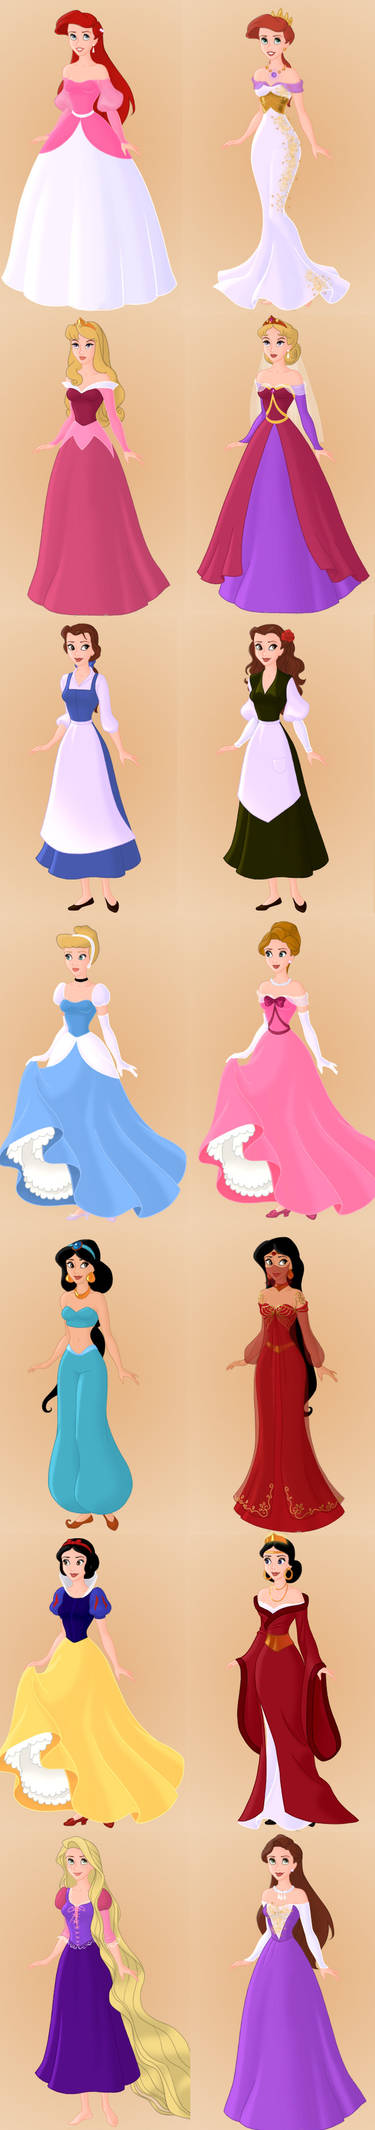 Disney Princesses And Their Moms by foreverbeginstoday on DeviantArt